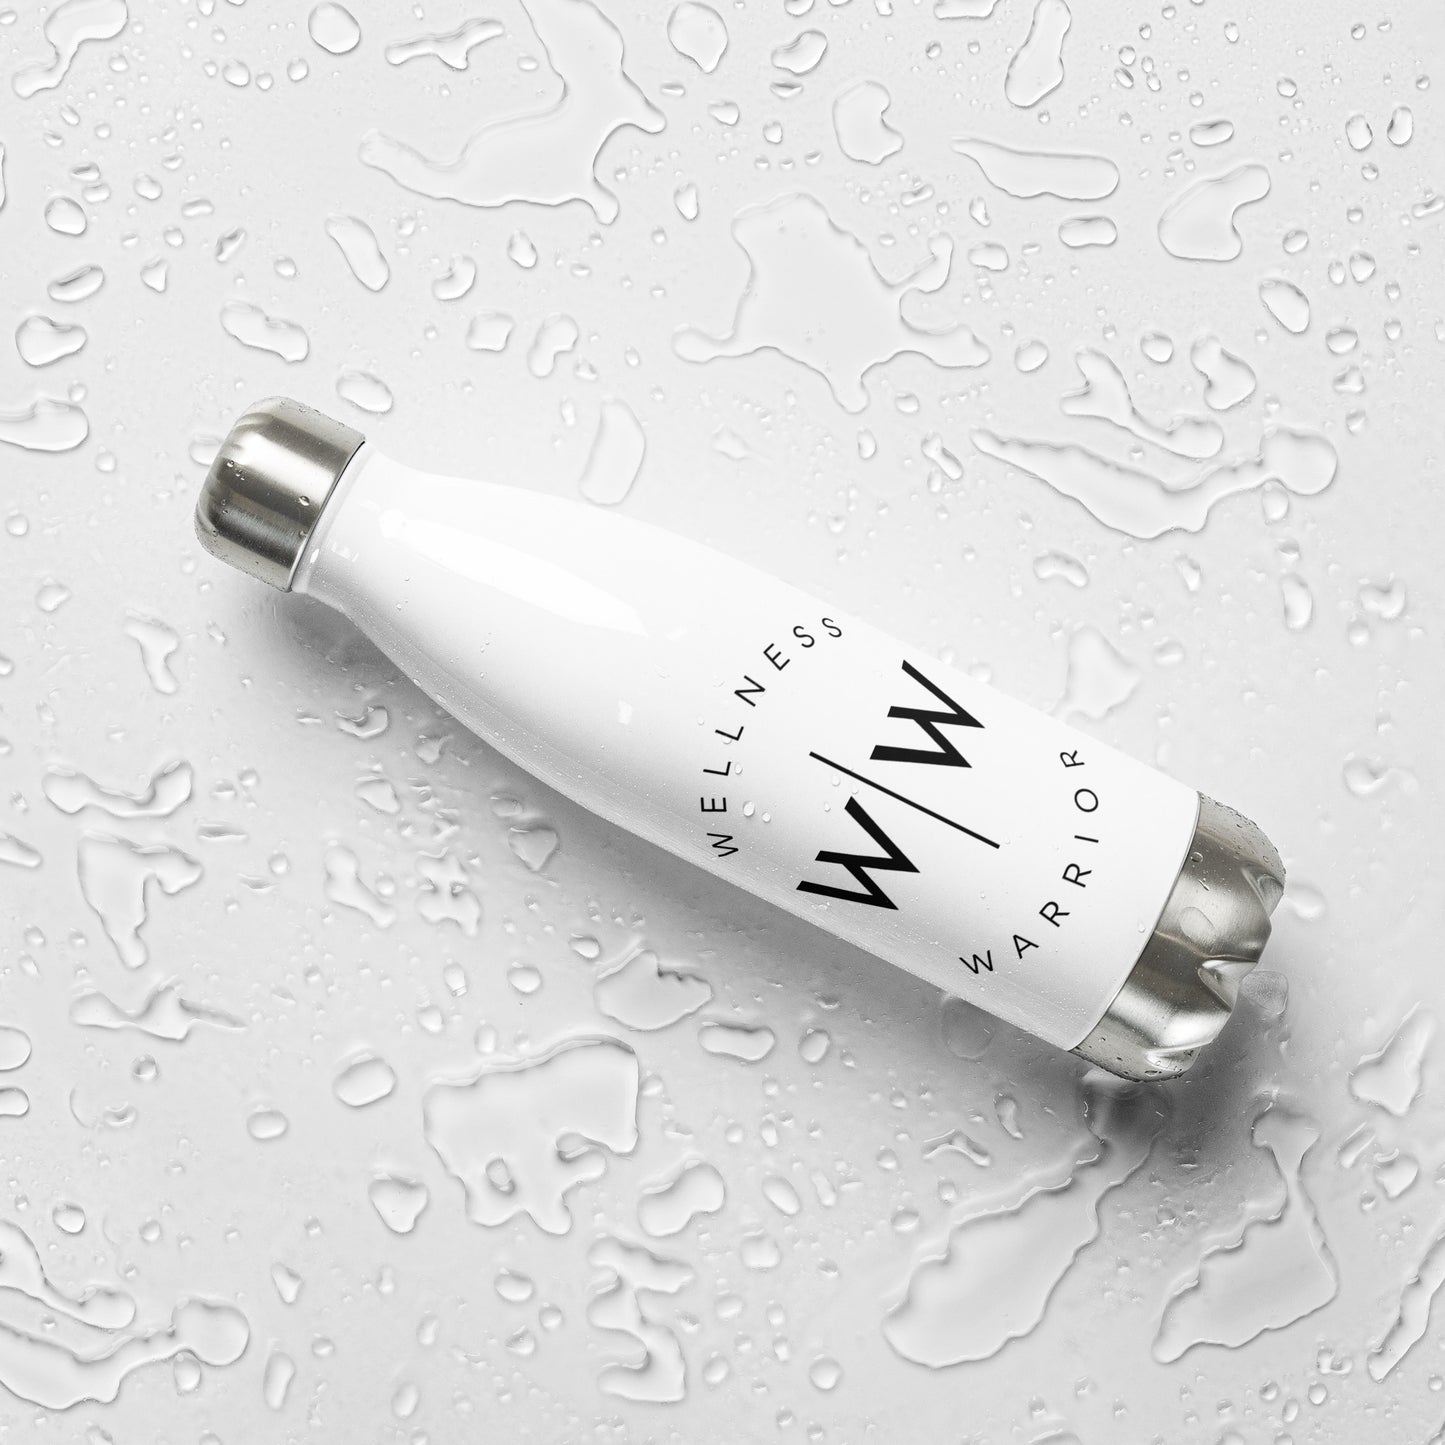 Wellness 17-oz. Double-Wall Stainless Steel Water Bottle